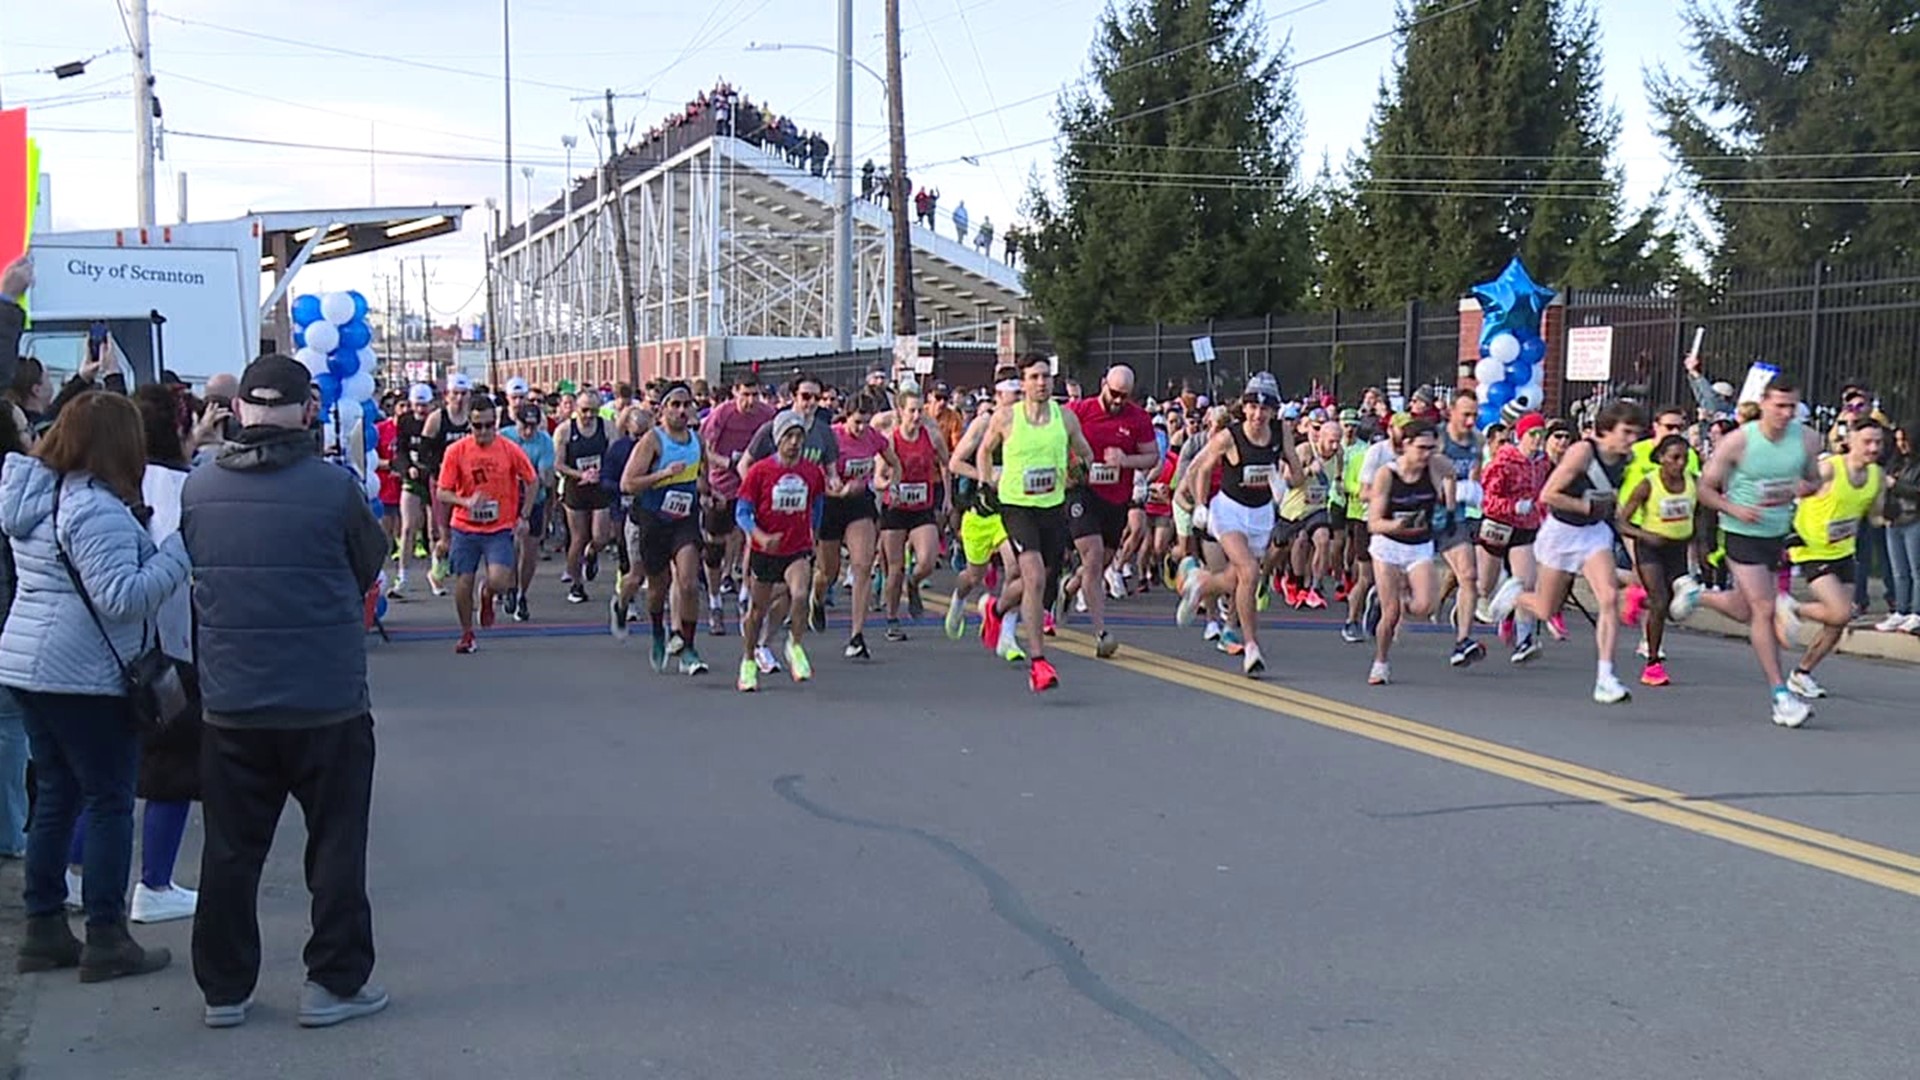 More than 1,000 runners took part in the Scranton Half Marathon on Sunday.